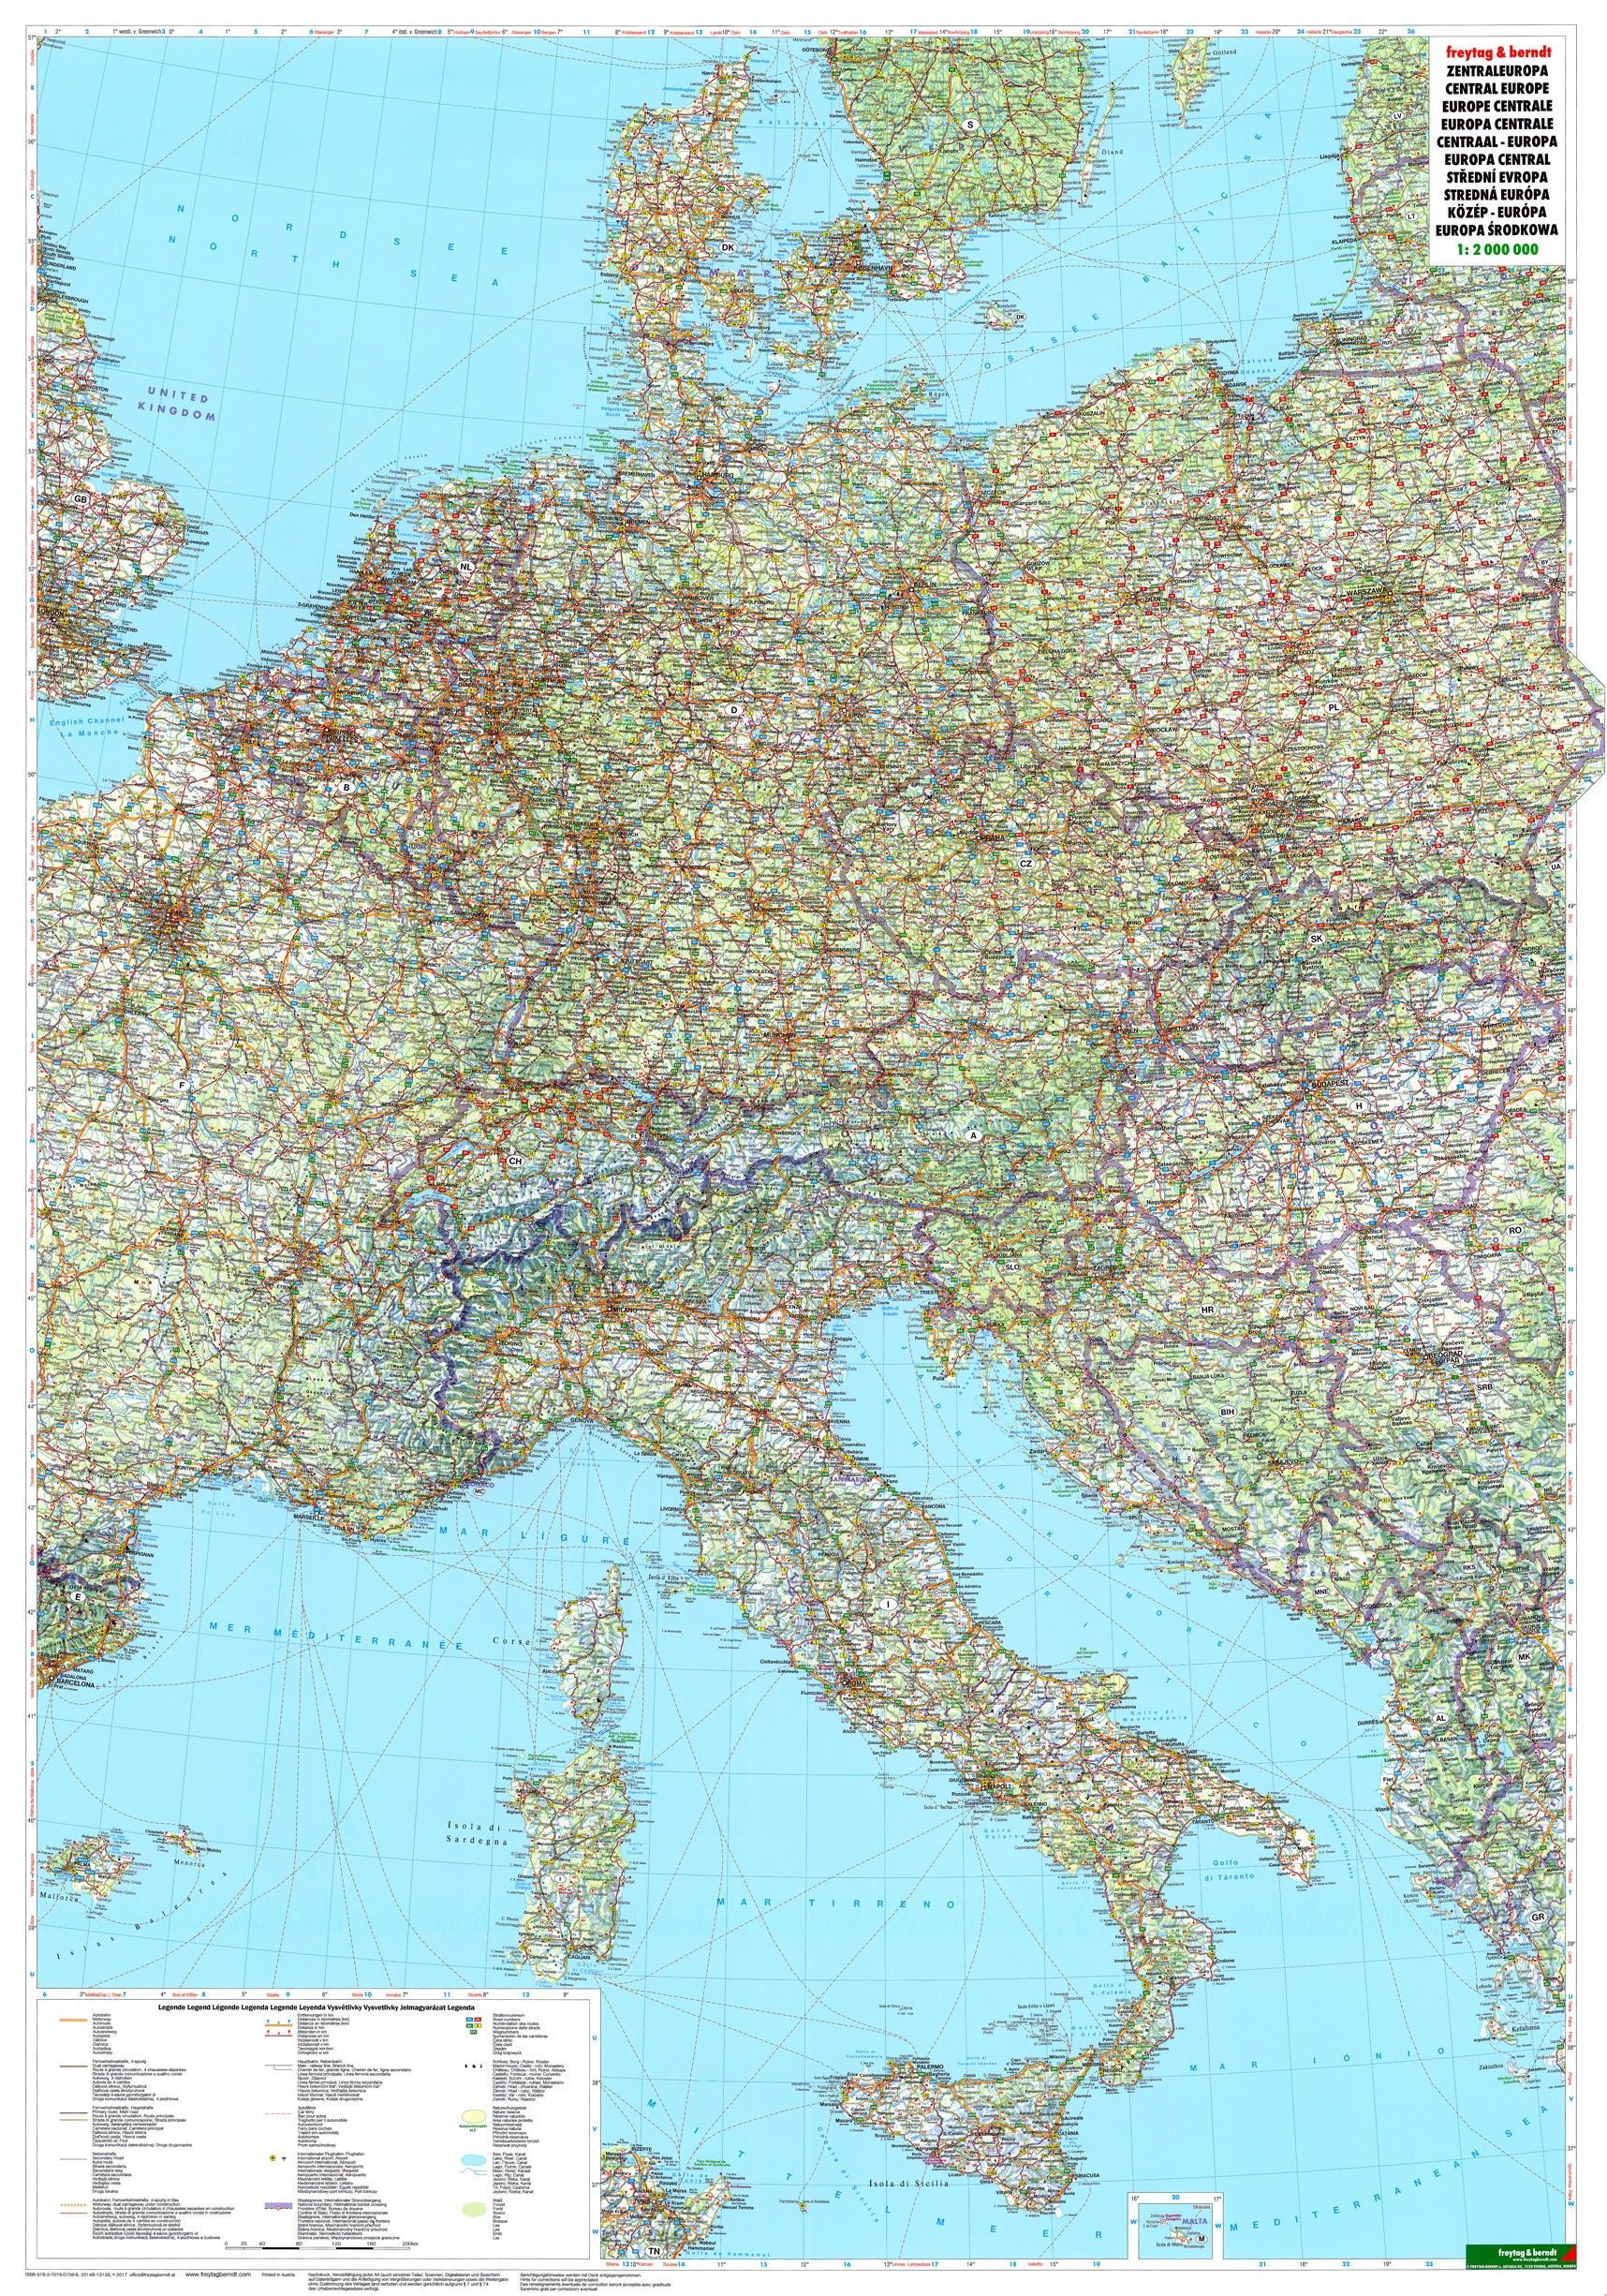 Midden Europa